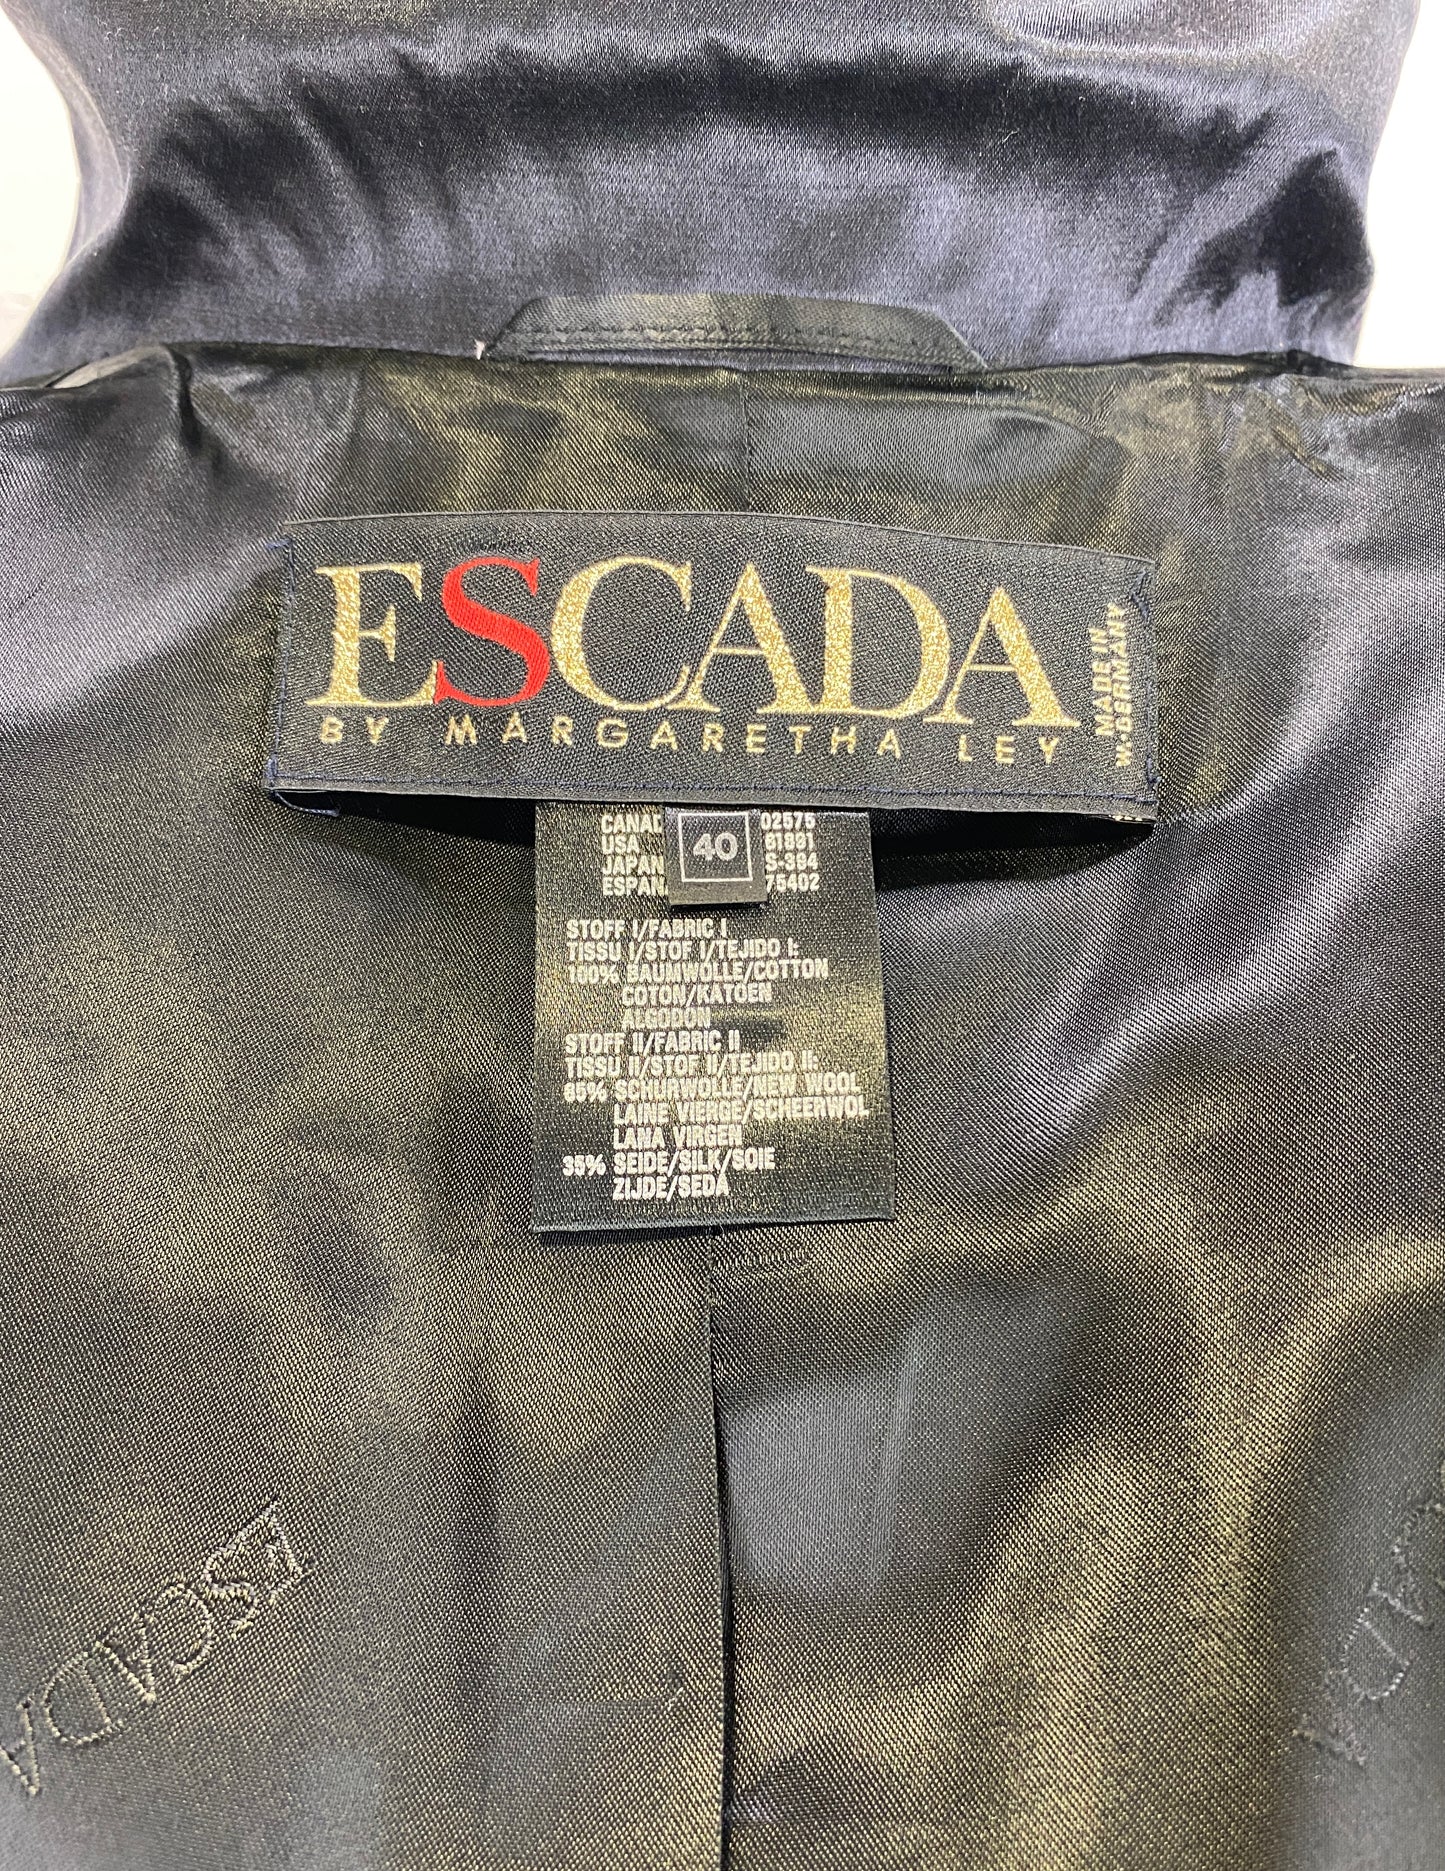 Vintage 80s Black Velvet & Satin Escada Skirt Suit, Medium 